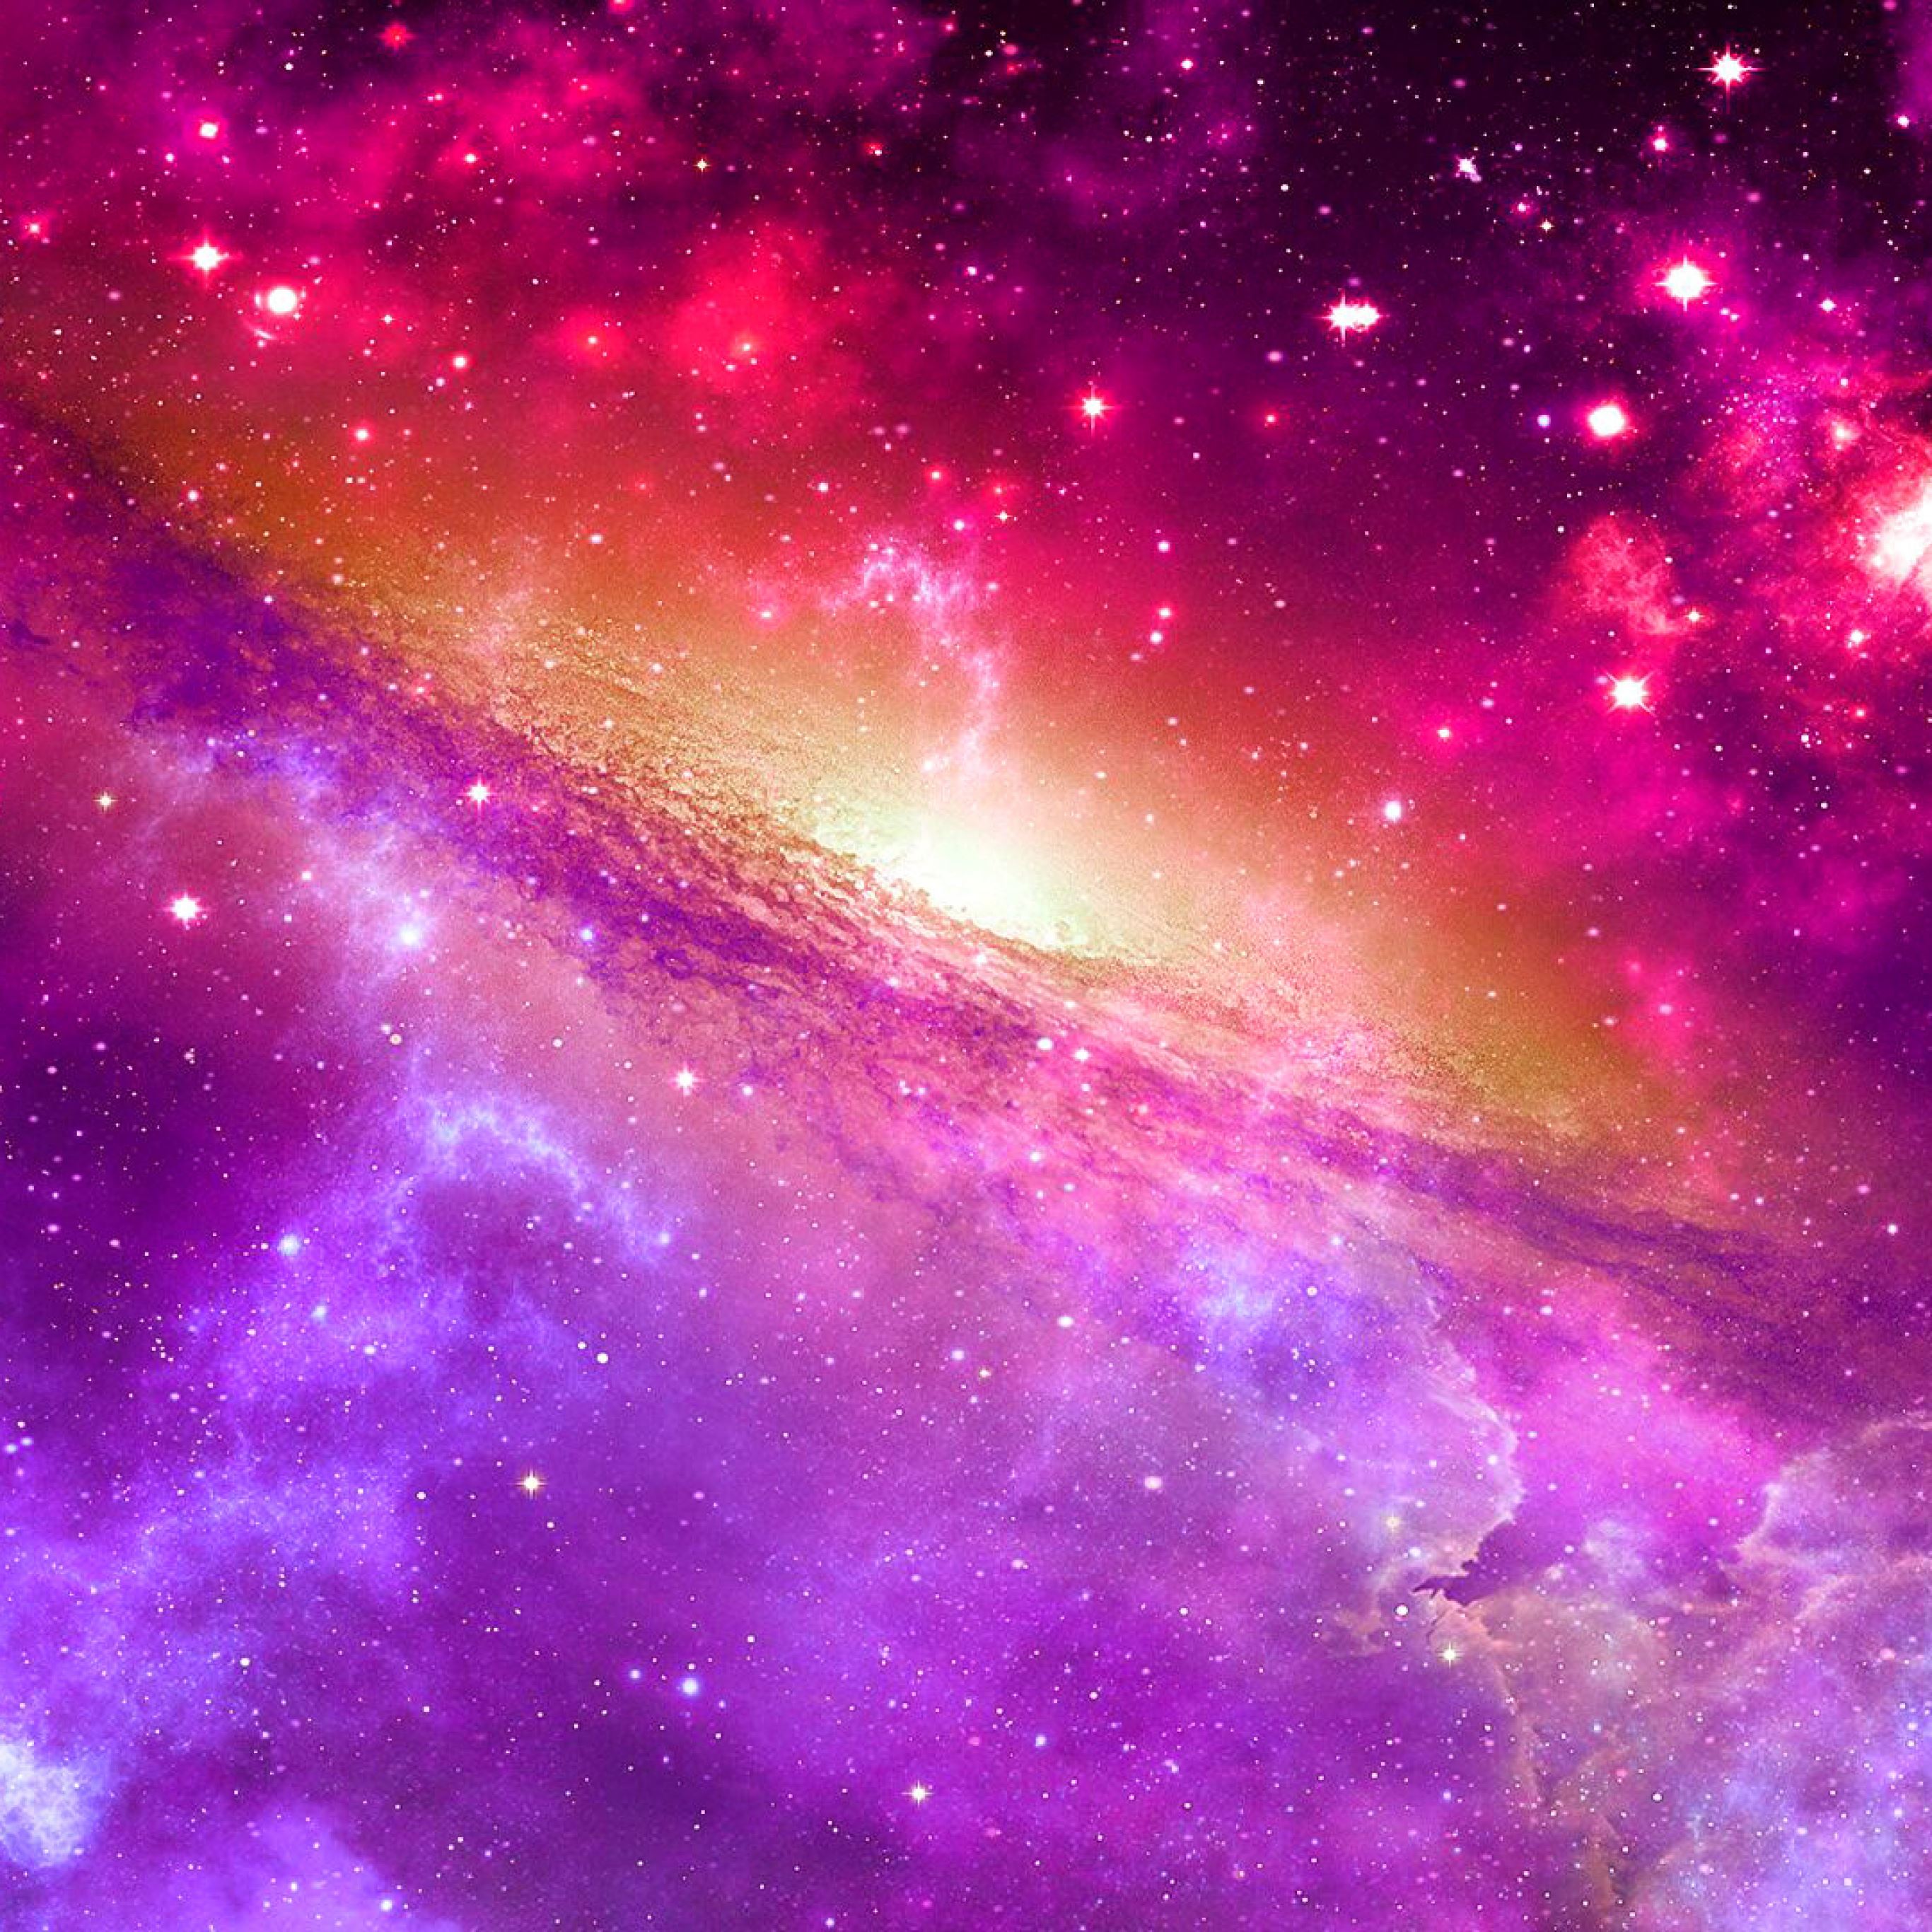 Space Universe Nebula Star Light Ipad Pro Wallpapers Free Download